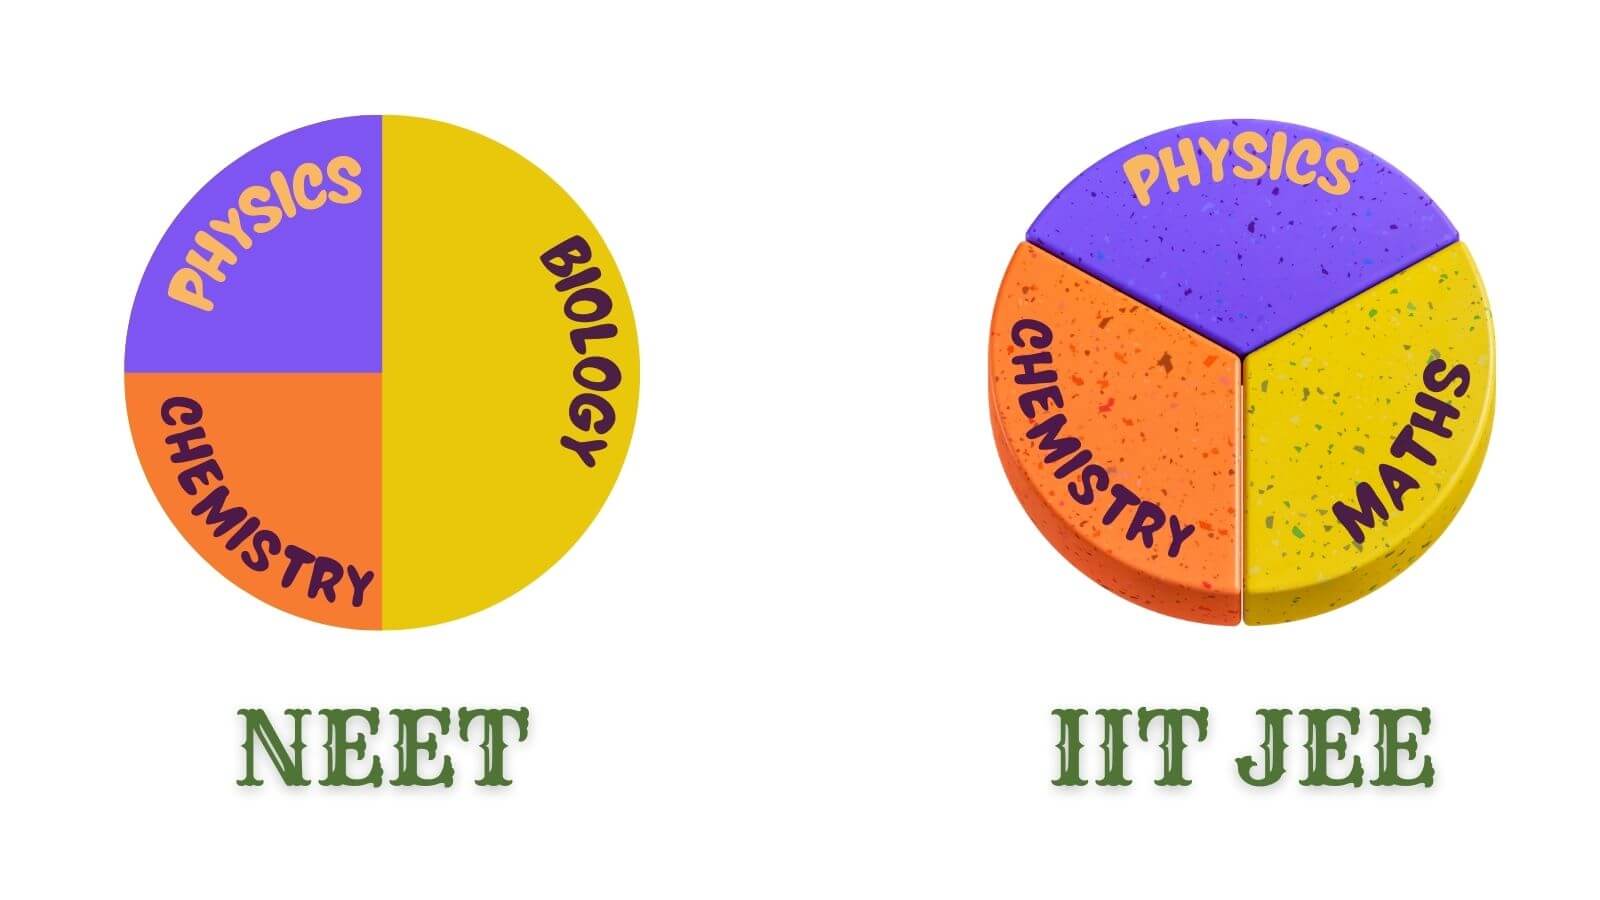 physics chemistry math biology subject pie chart for neet jee